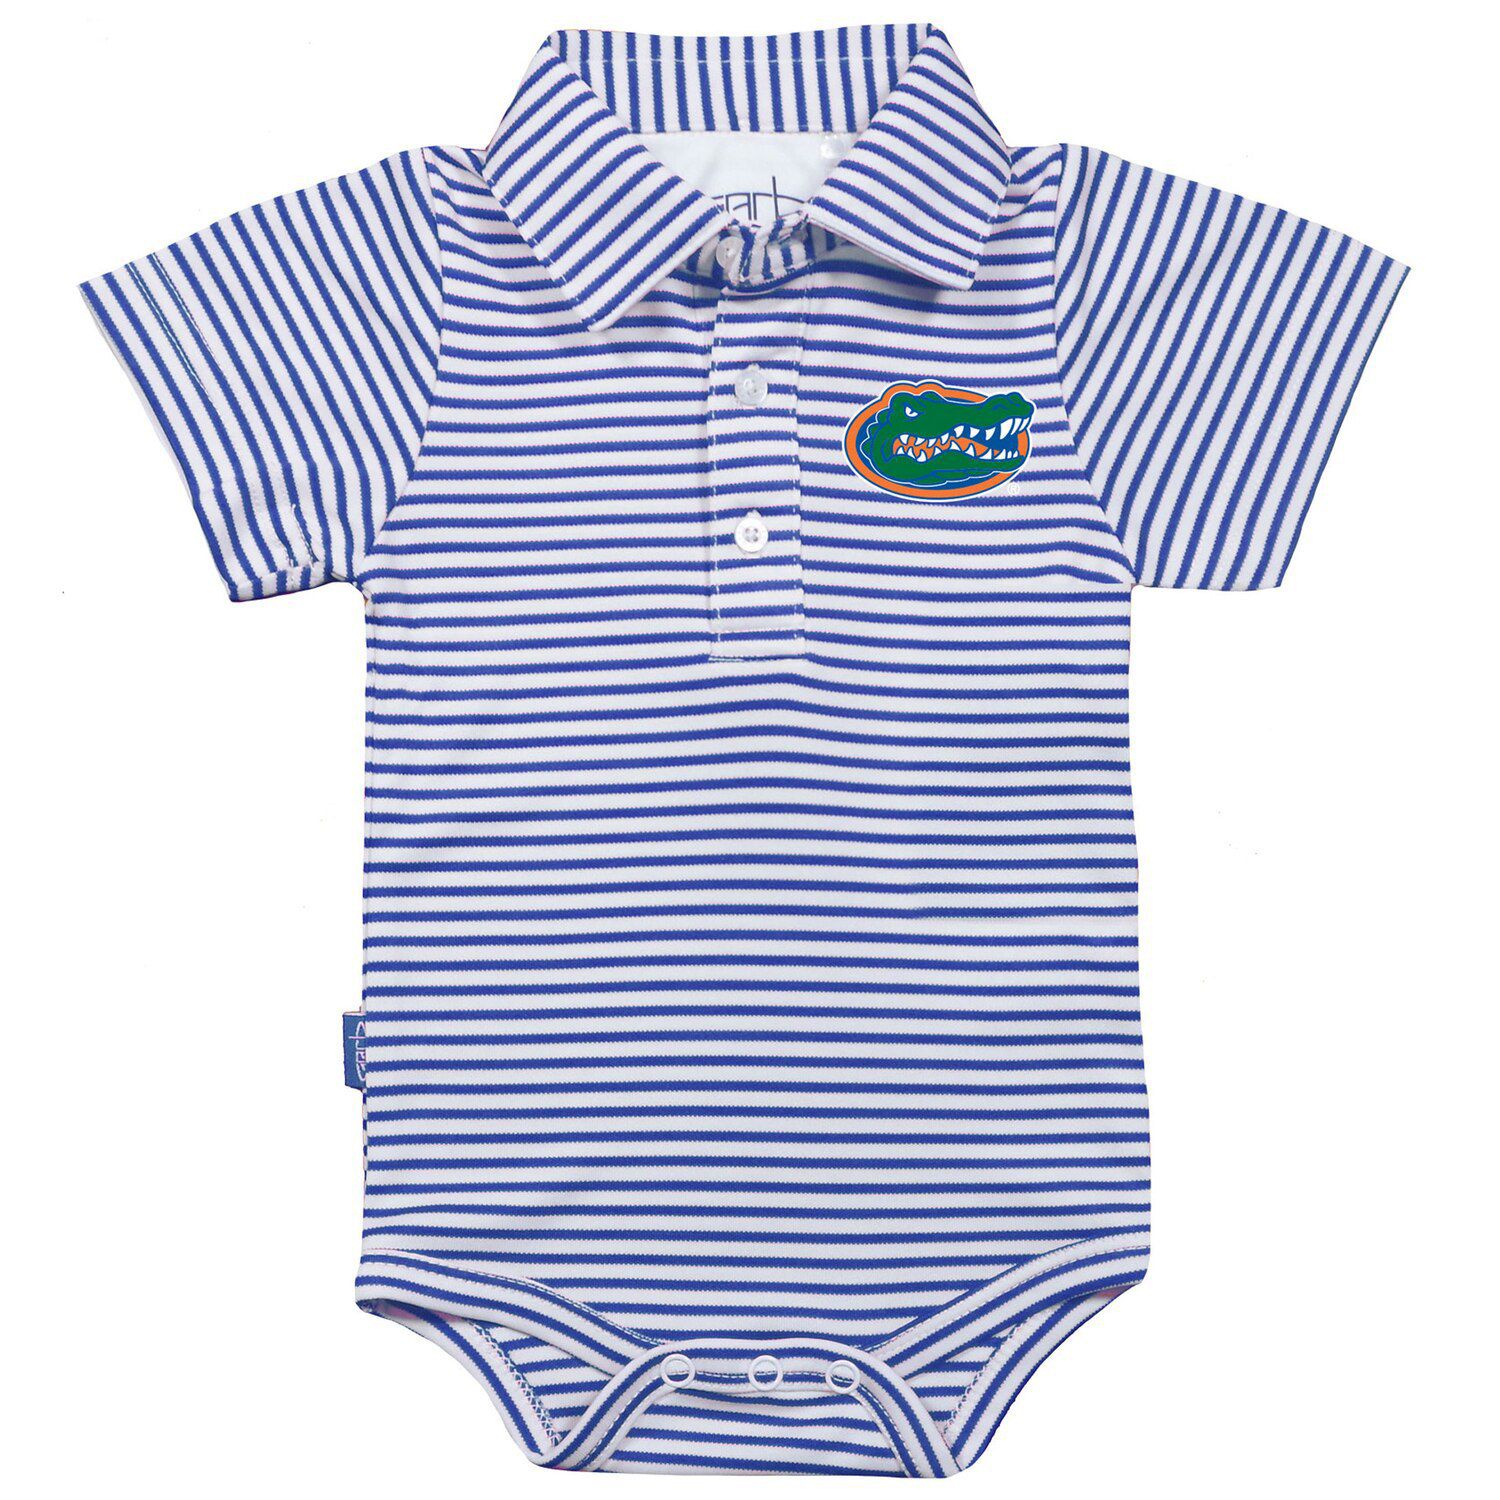 Florida Gators infant jersey